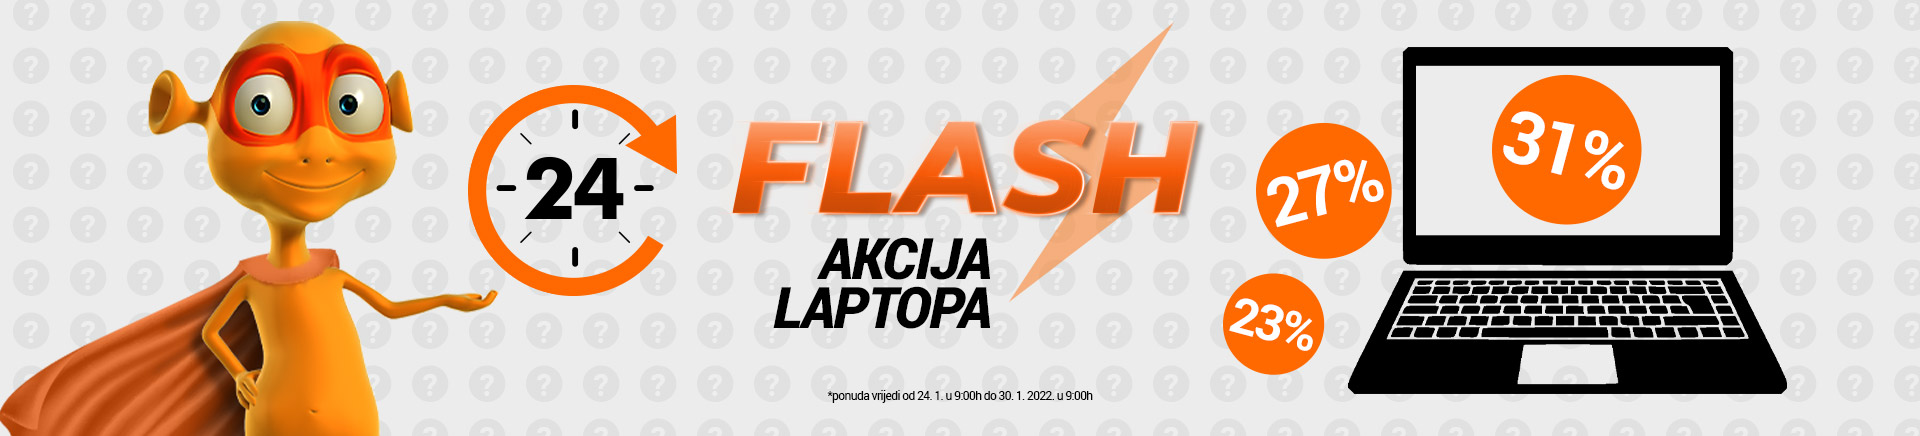 BA Flash Akcija Laptopi LANDING MOBILE 380 X 436.jpg